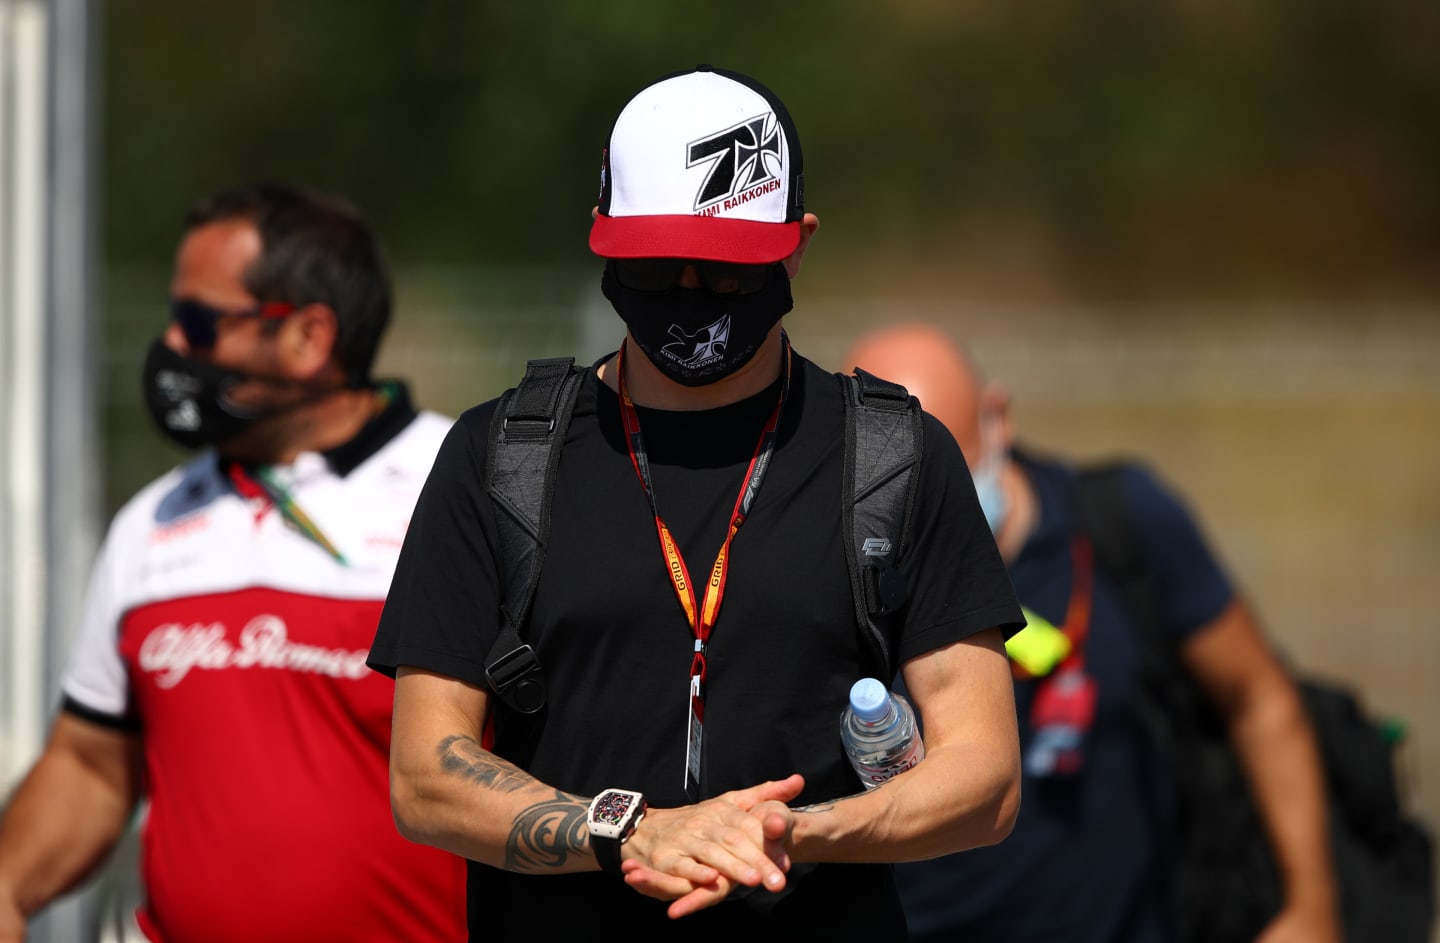 BARCELONA, SPAIN - AUGUST 13: Kimi Raikkonen of Finland and Alfa Romeo Racing arrives in the